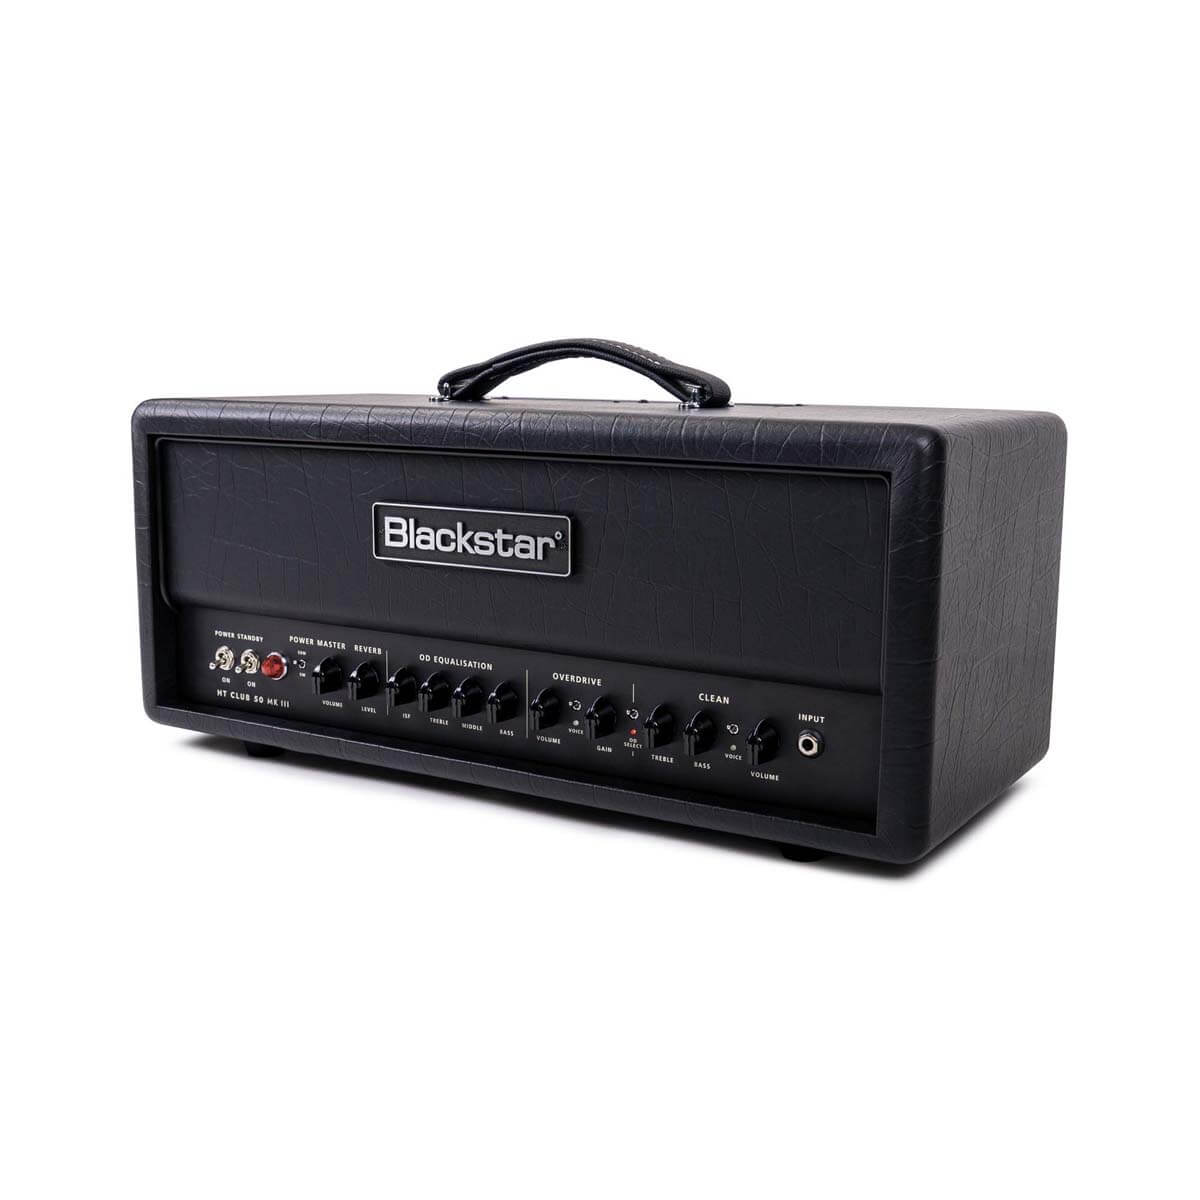 Blackstar HT Club 50 MK III 50-watts Tube Amplifier Head